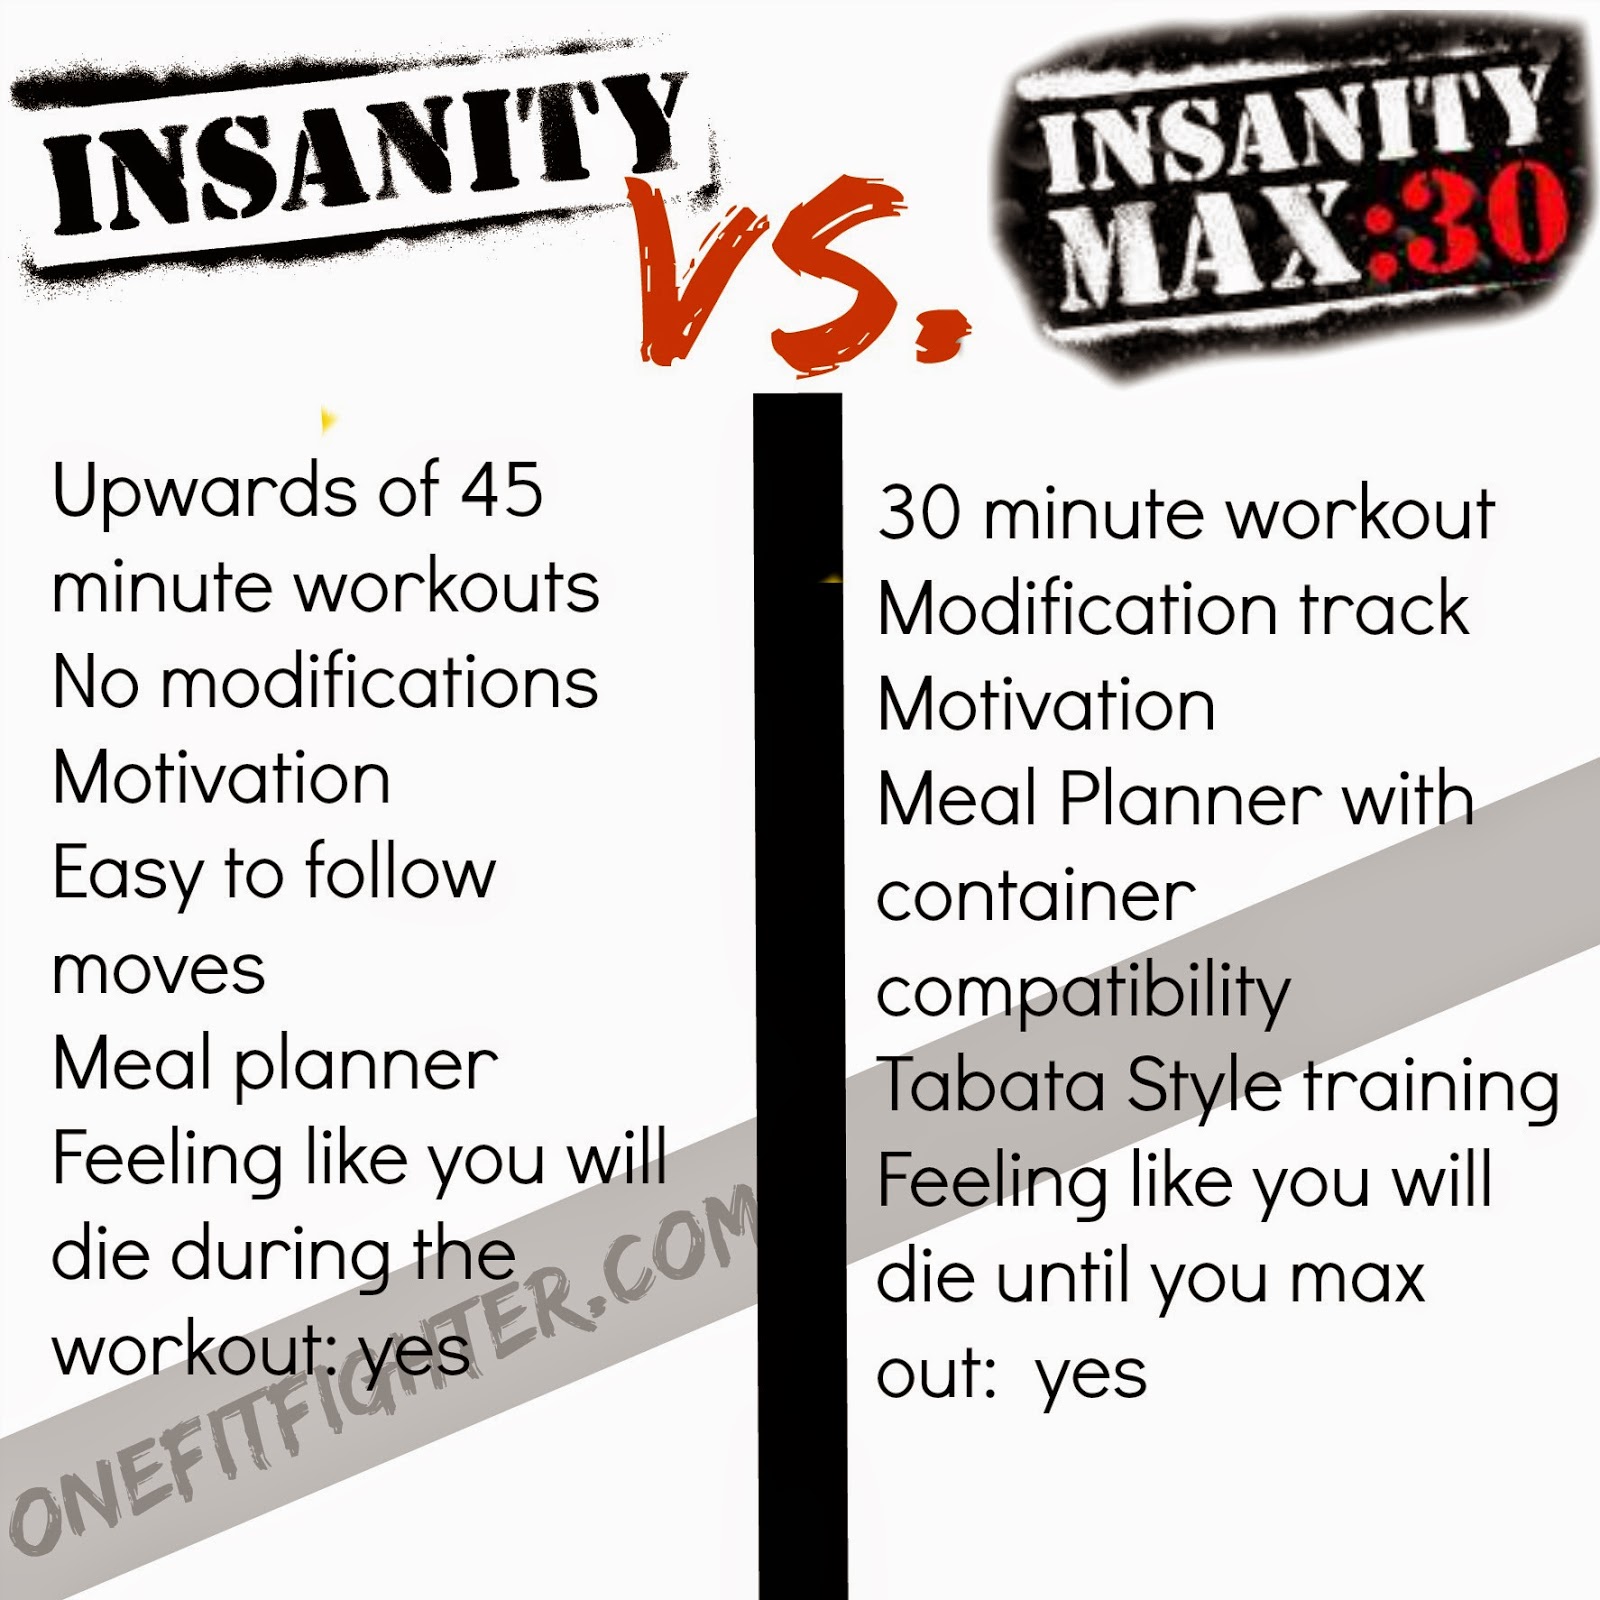 insanity vs. max30, new shaun t workout 